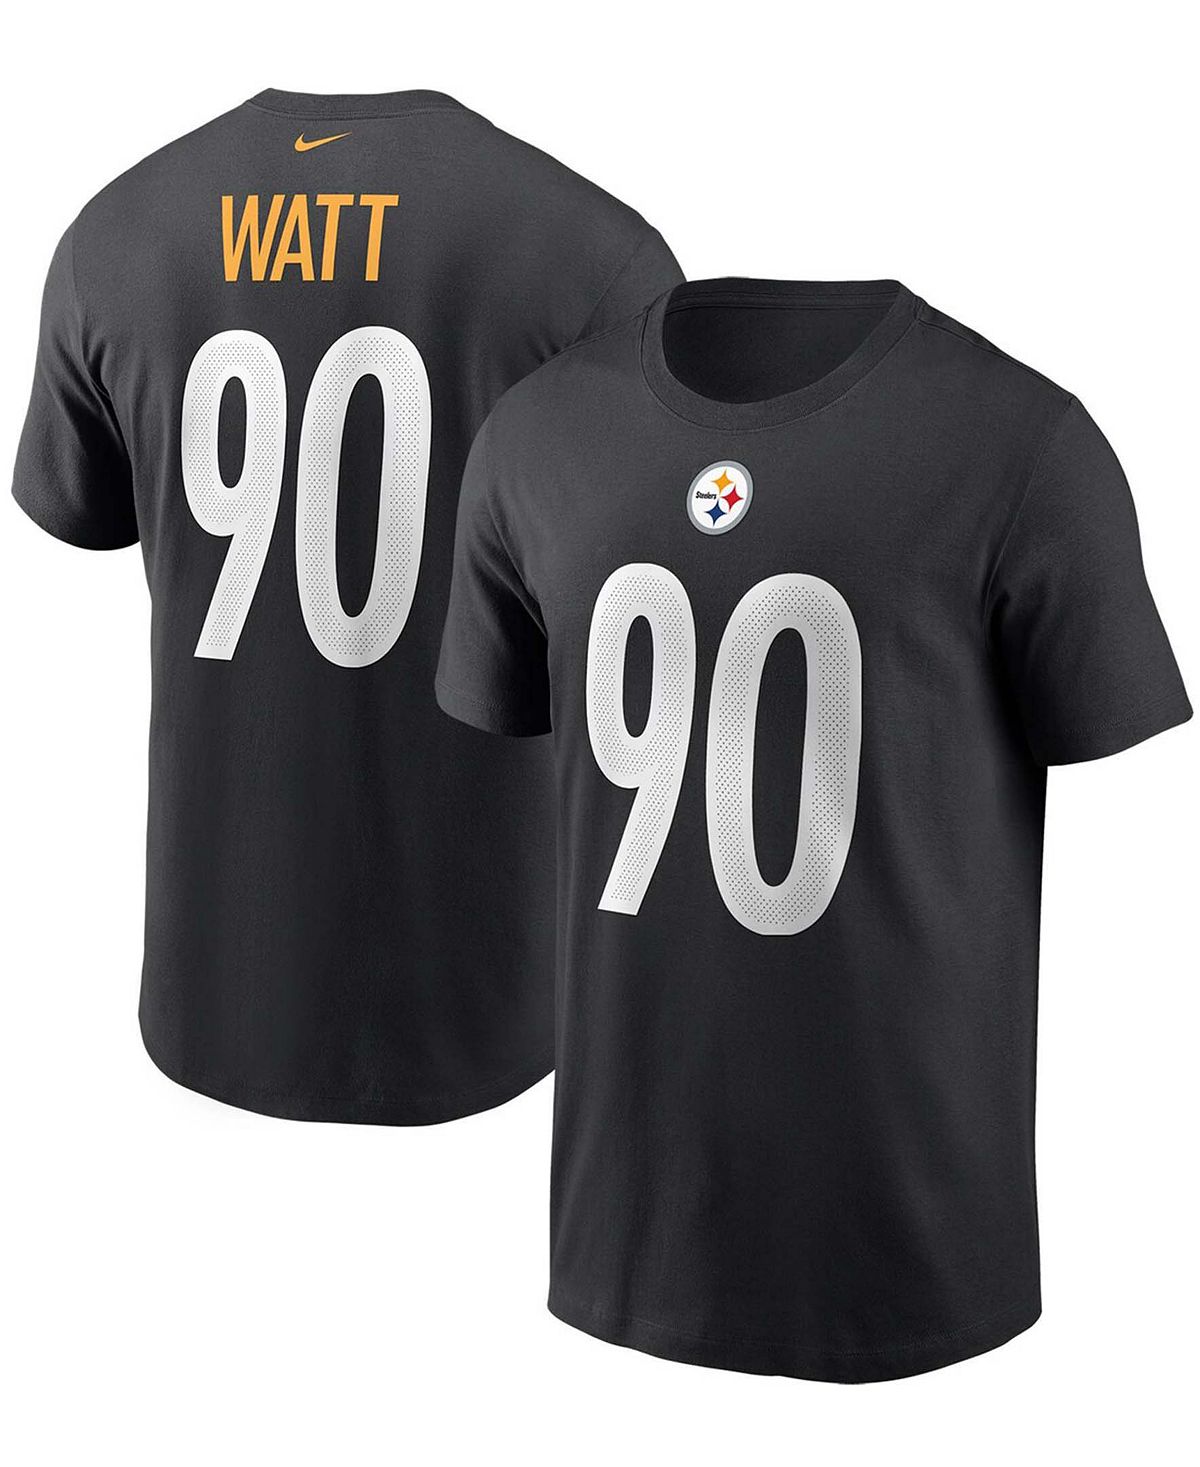 Мужской Ти Джей Черная футболка с именем и номером Watt Pittsburgh Steelers Nike